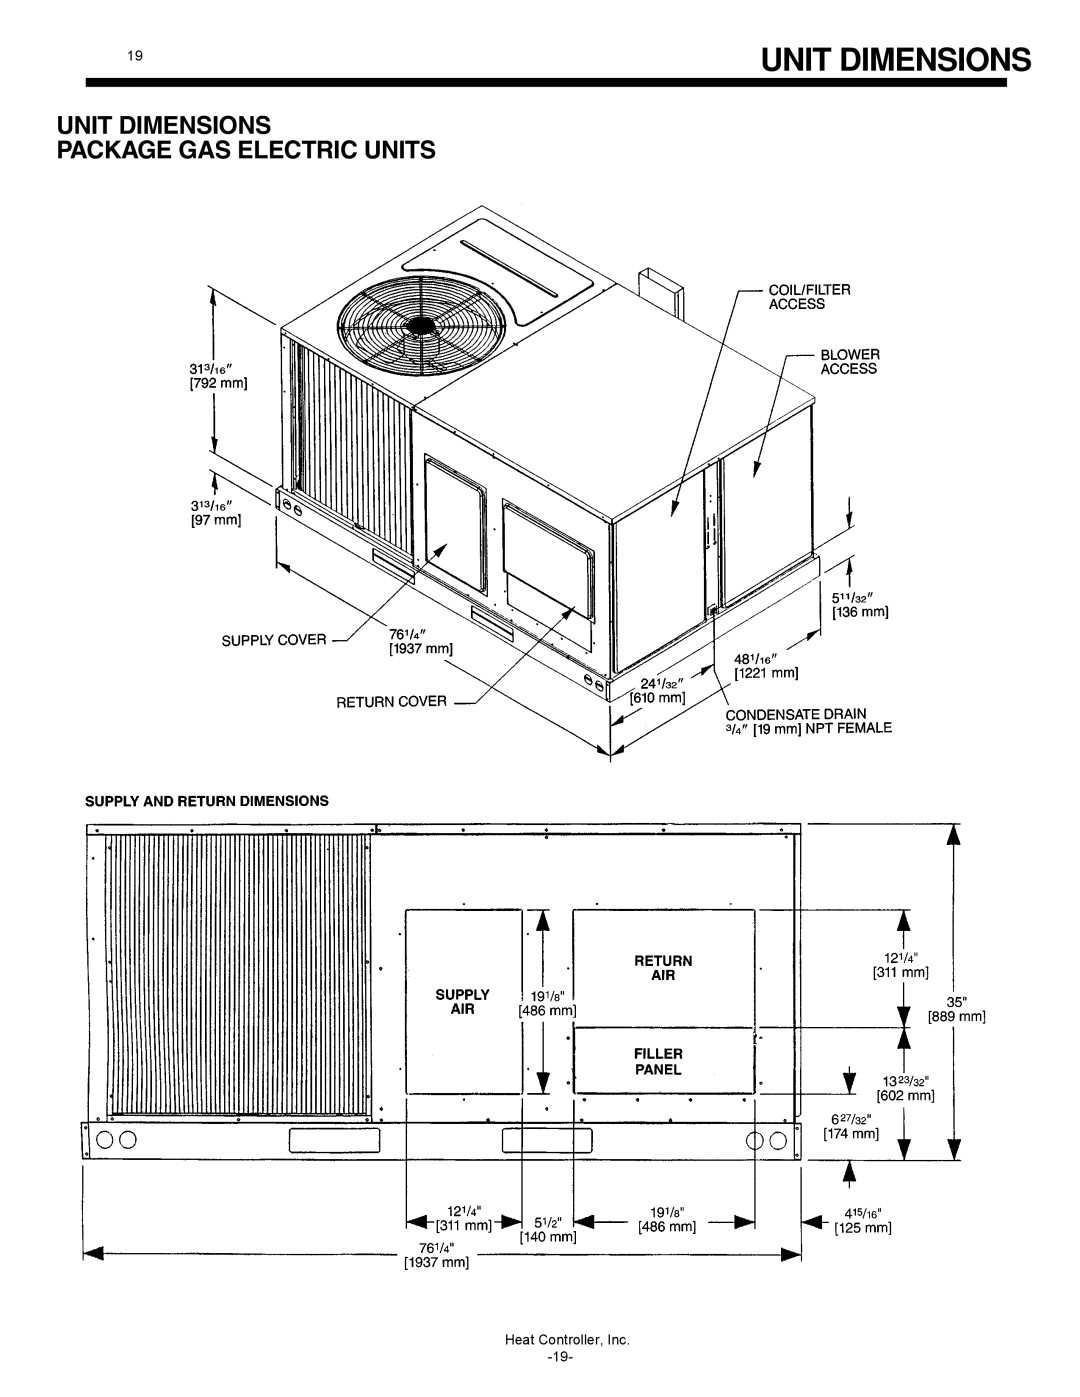 Heat Controller TGC048C-1K-135, TGC060C-4K-135 manual Unit Dimensions Package Gas Electric Units, Heat Controller, Inc 